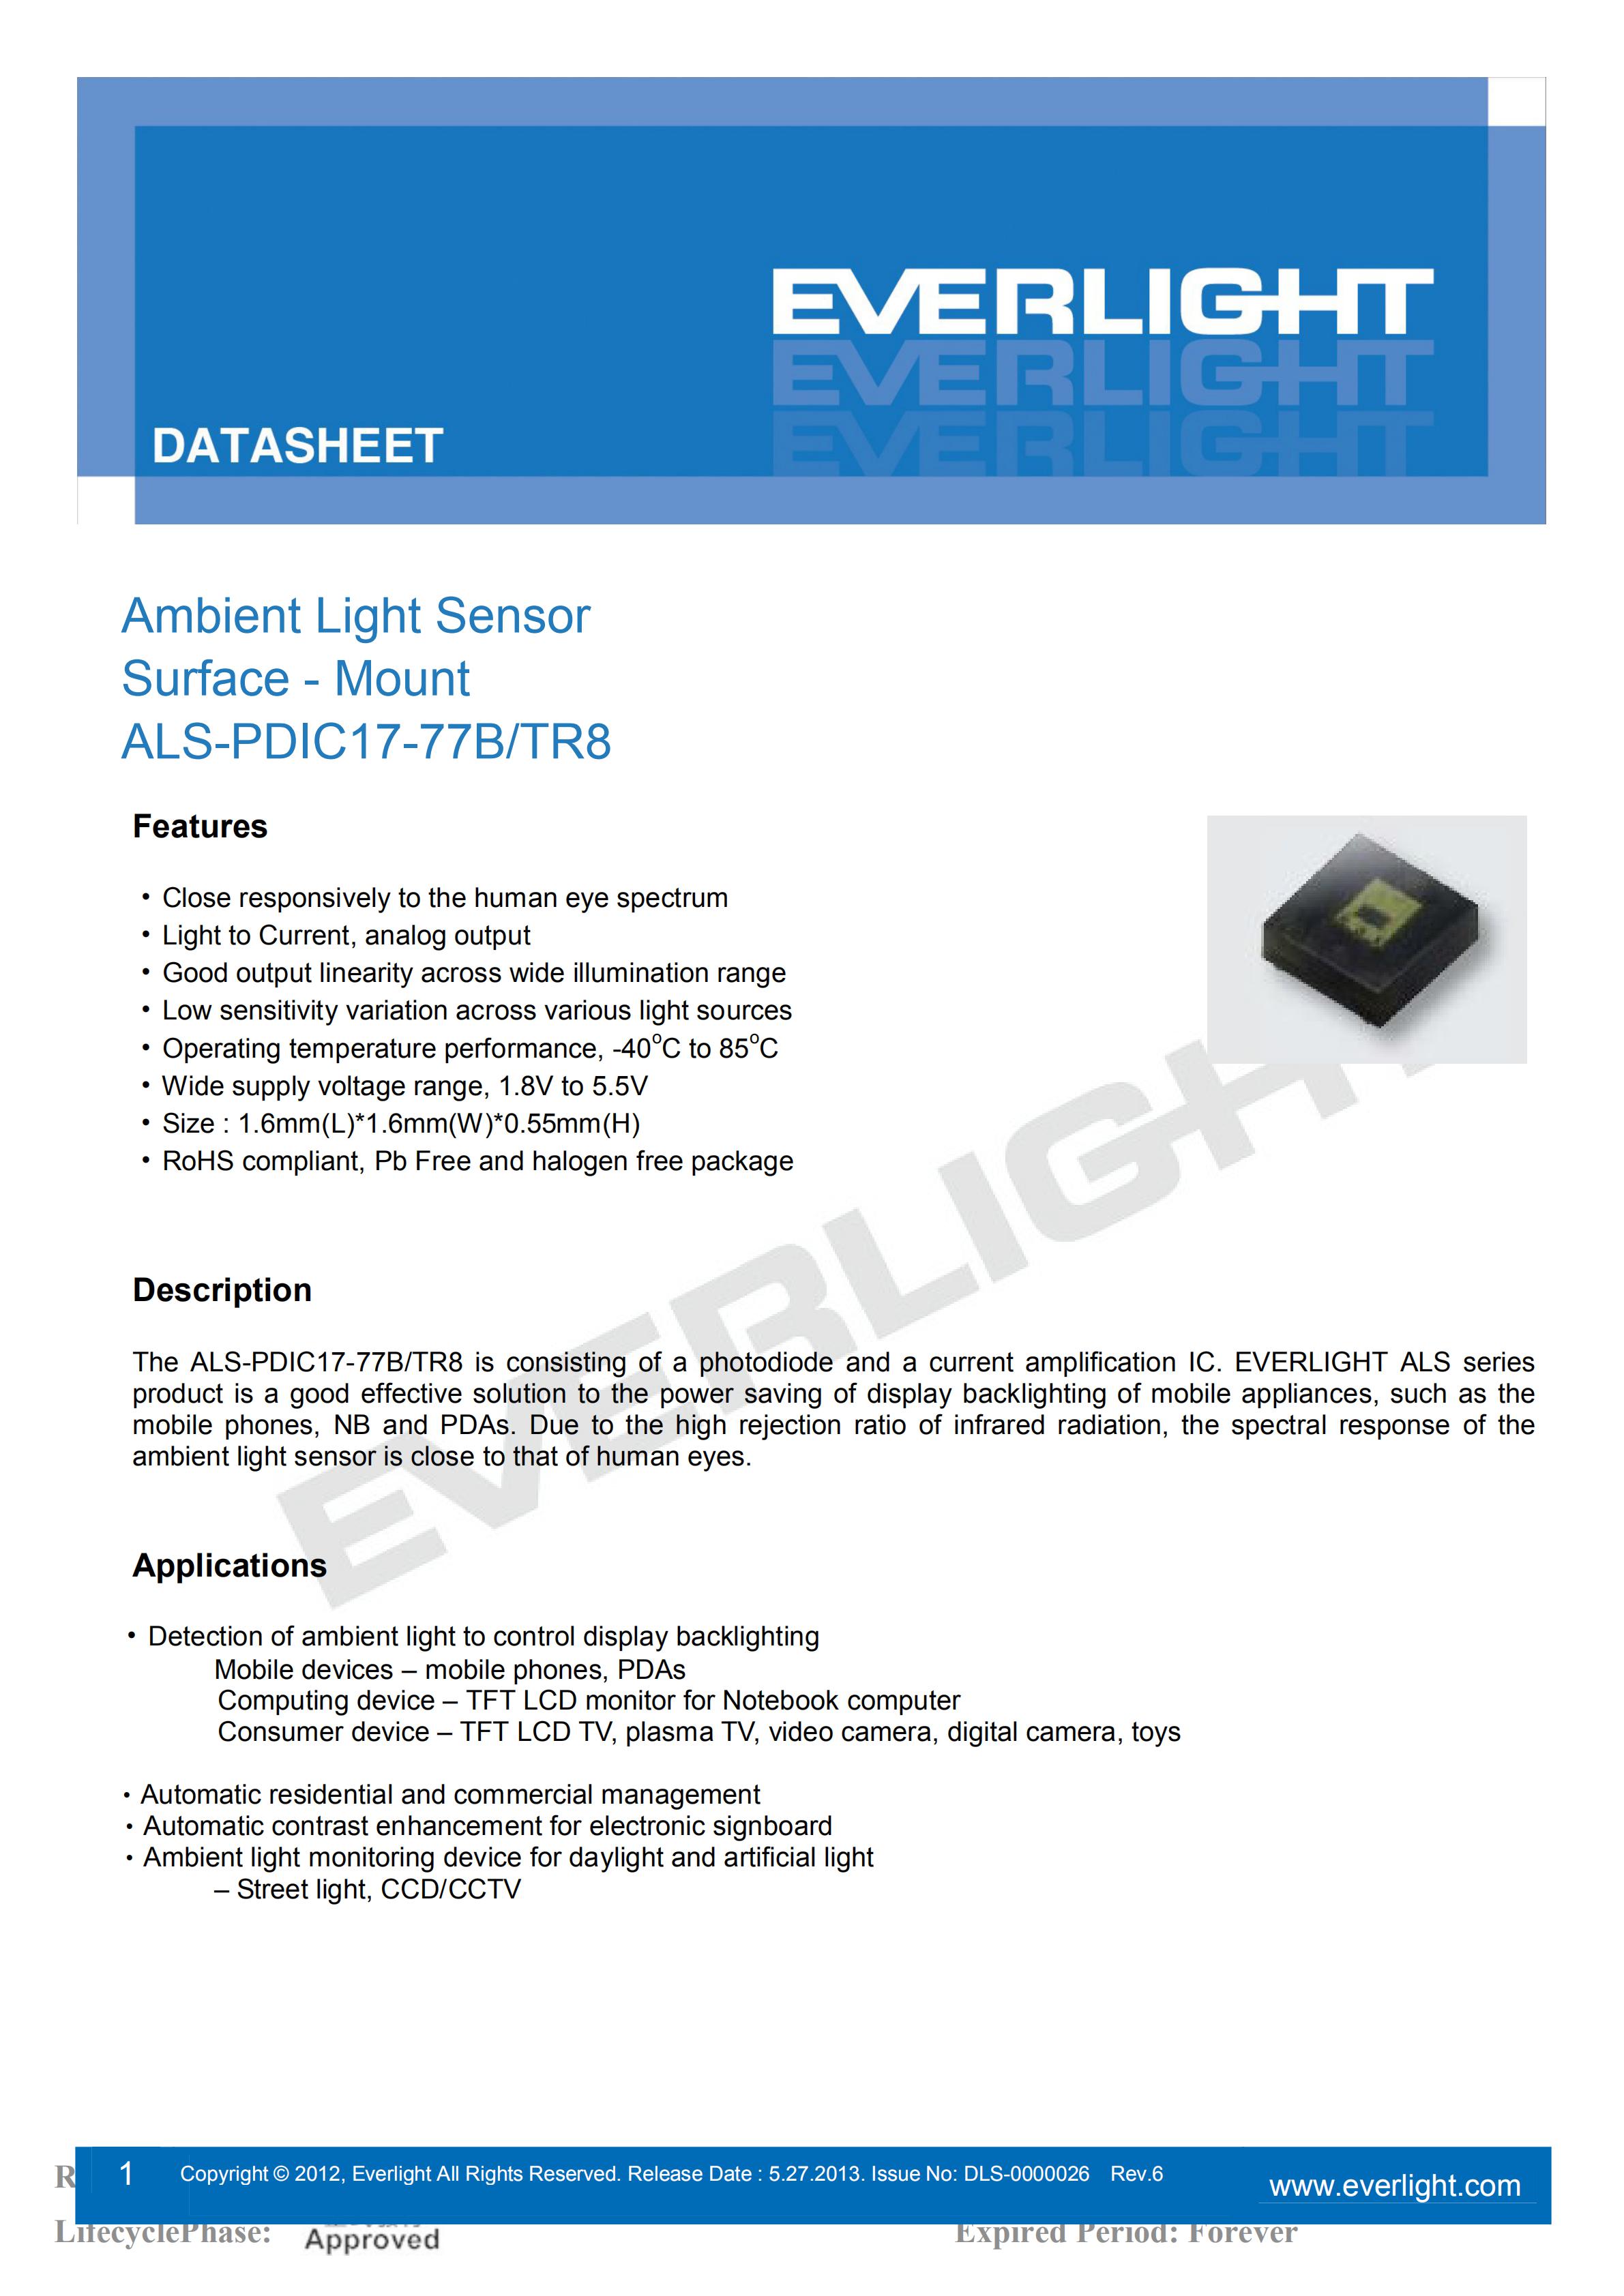 EVERLIGHT SMD 0805 AMBIENT LIGHT SENSOR ALS-PDIC17-77B/TR8 Datasheet